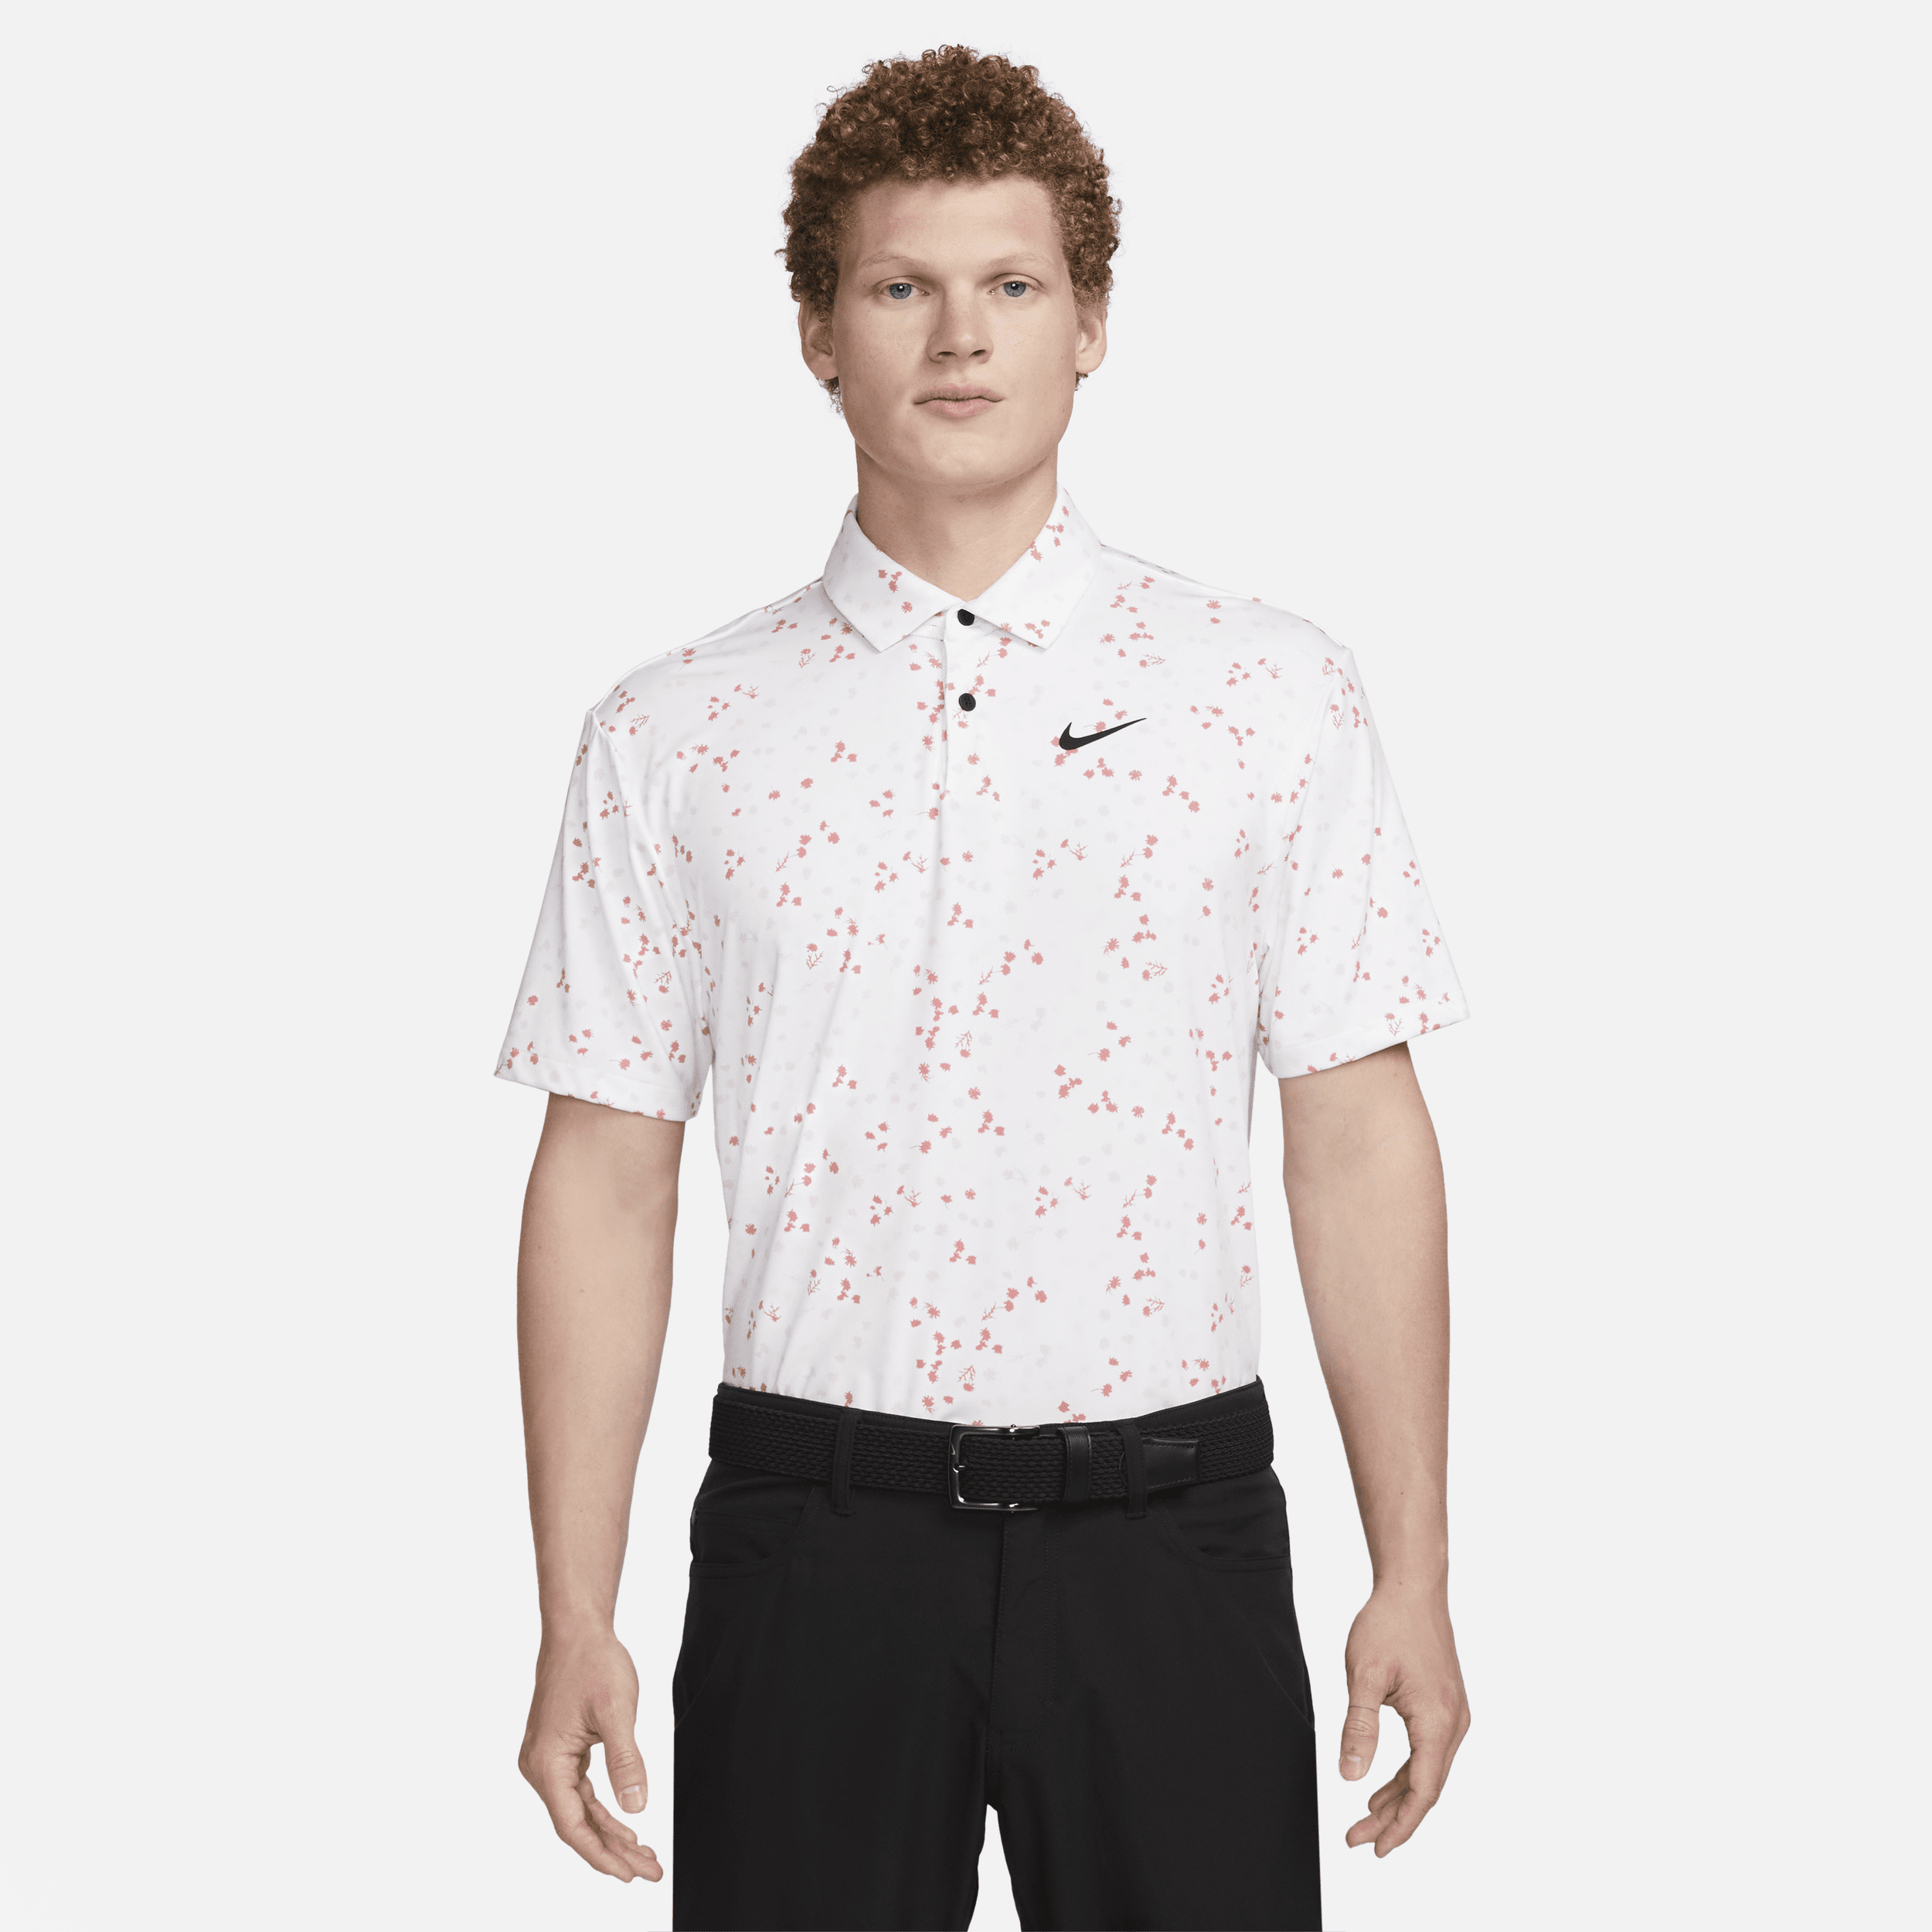 Nike Dri-FIT Tour Polo de golf con estampado floral - Hombre - Blanco